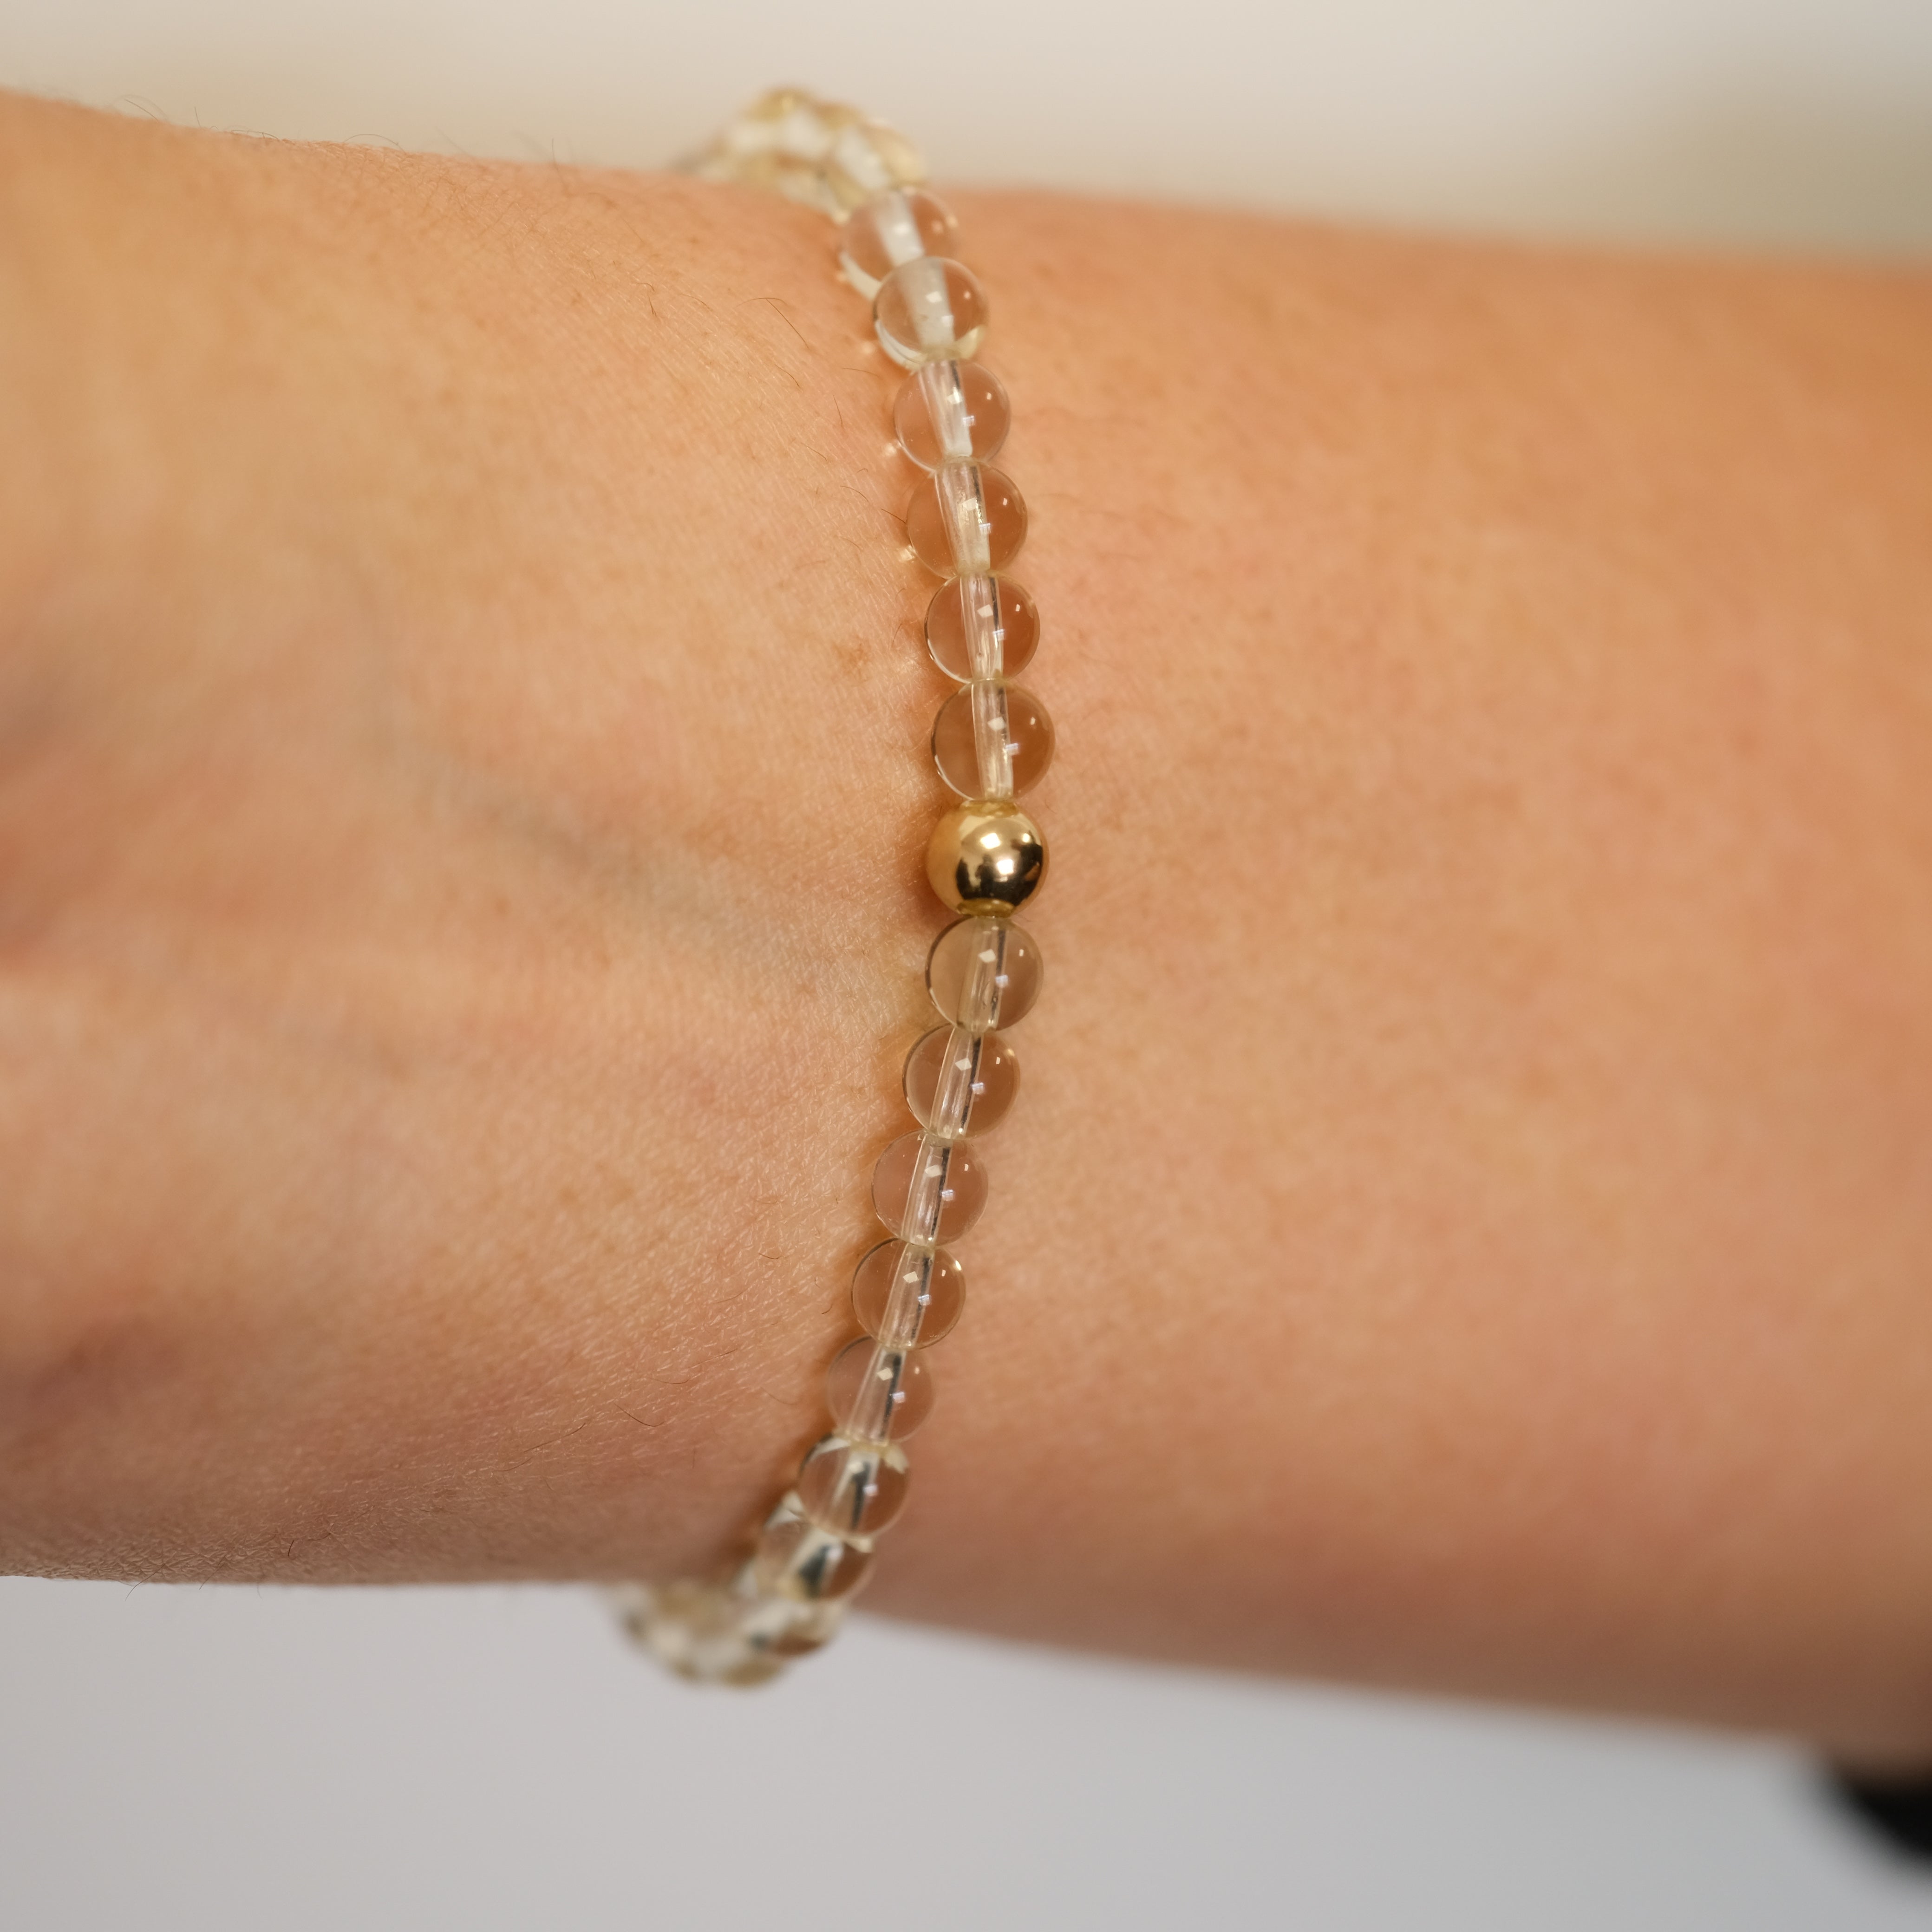 4mm citrine bracelet worn on a model's wrist from the back